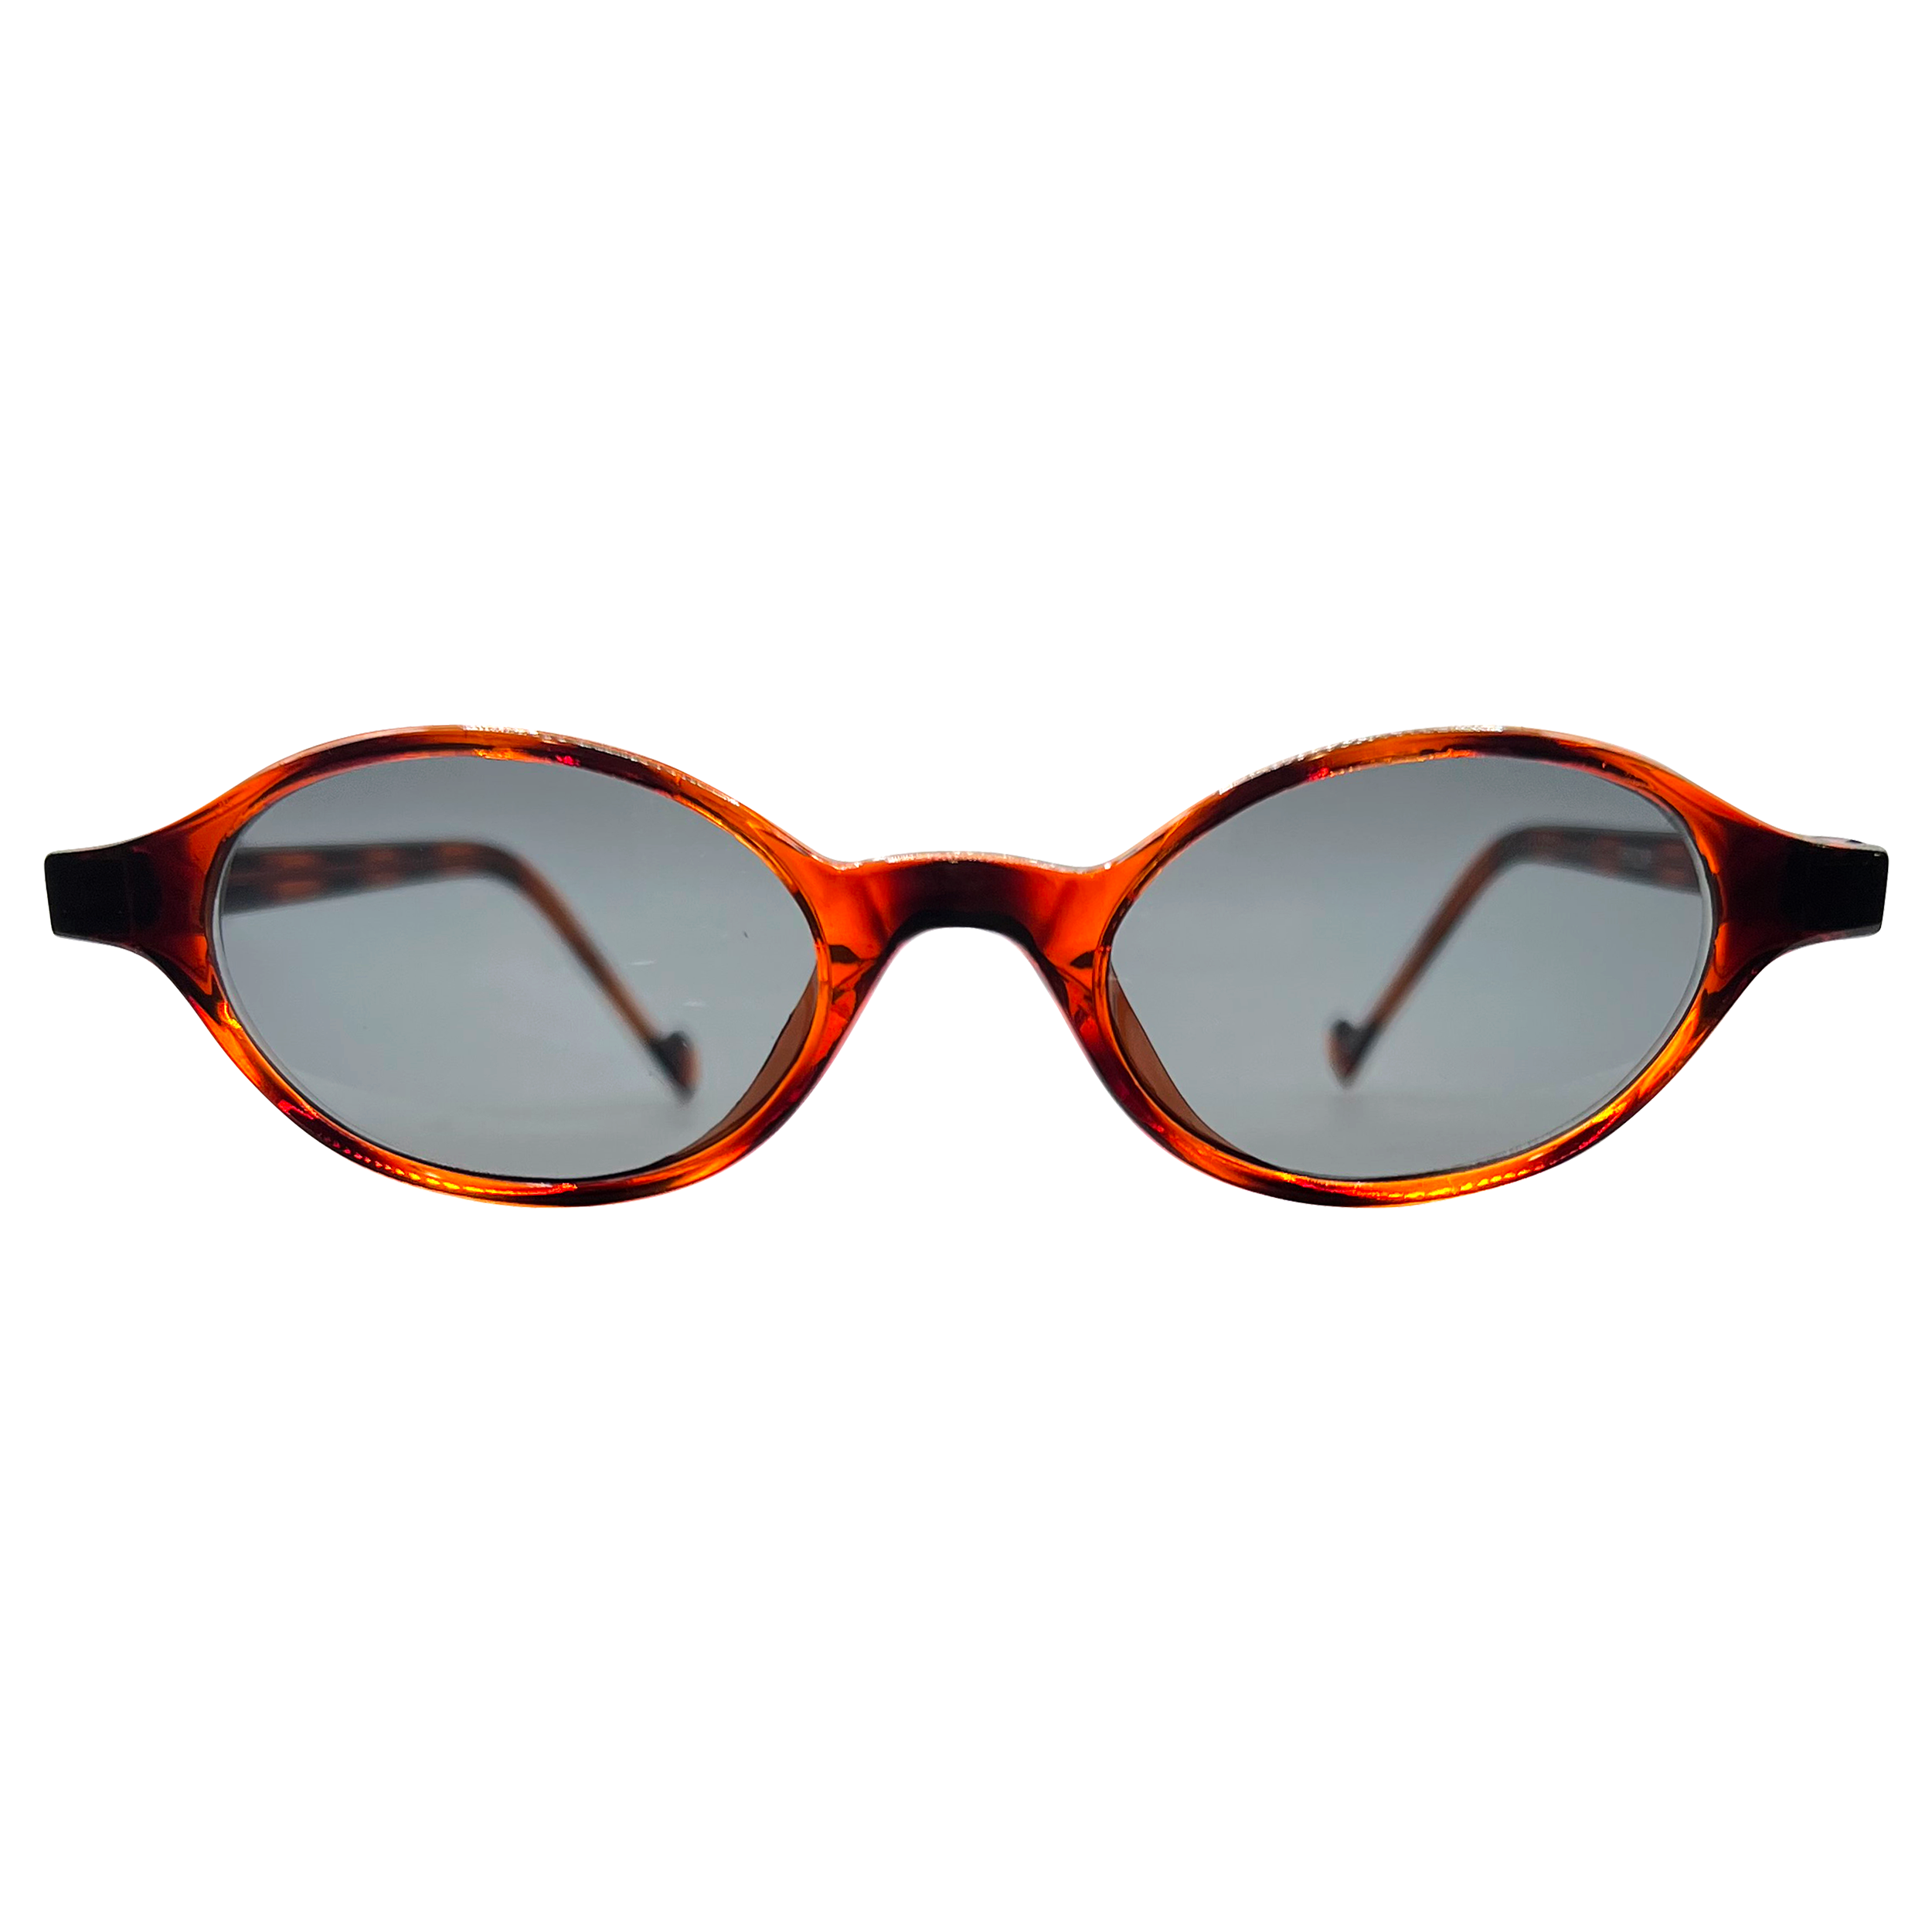 BITZ Tortoise/Super Dark Oval Sunglasses